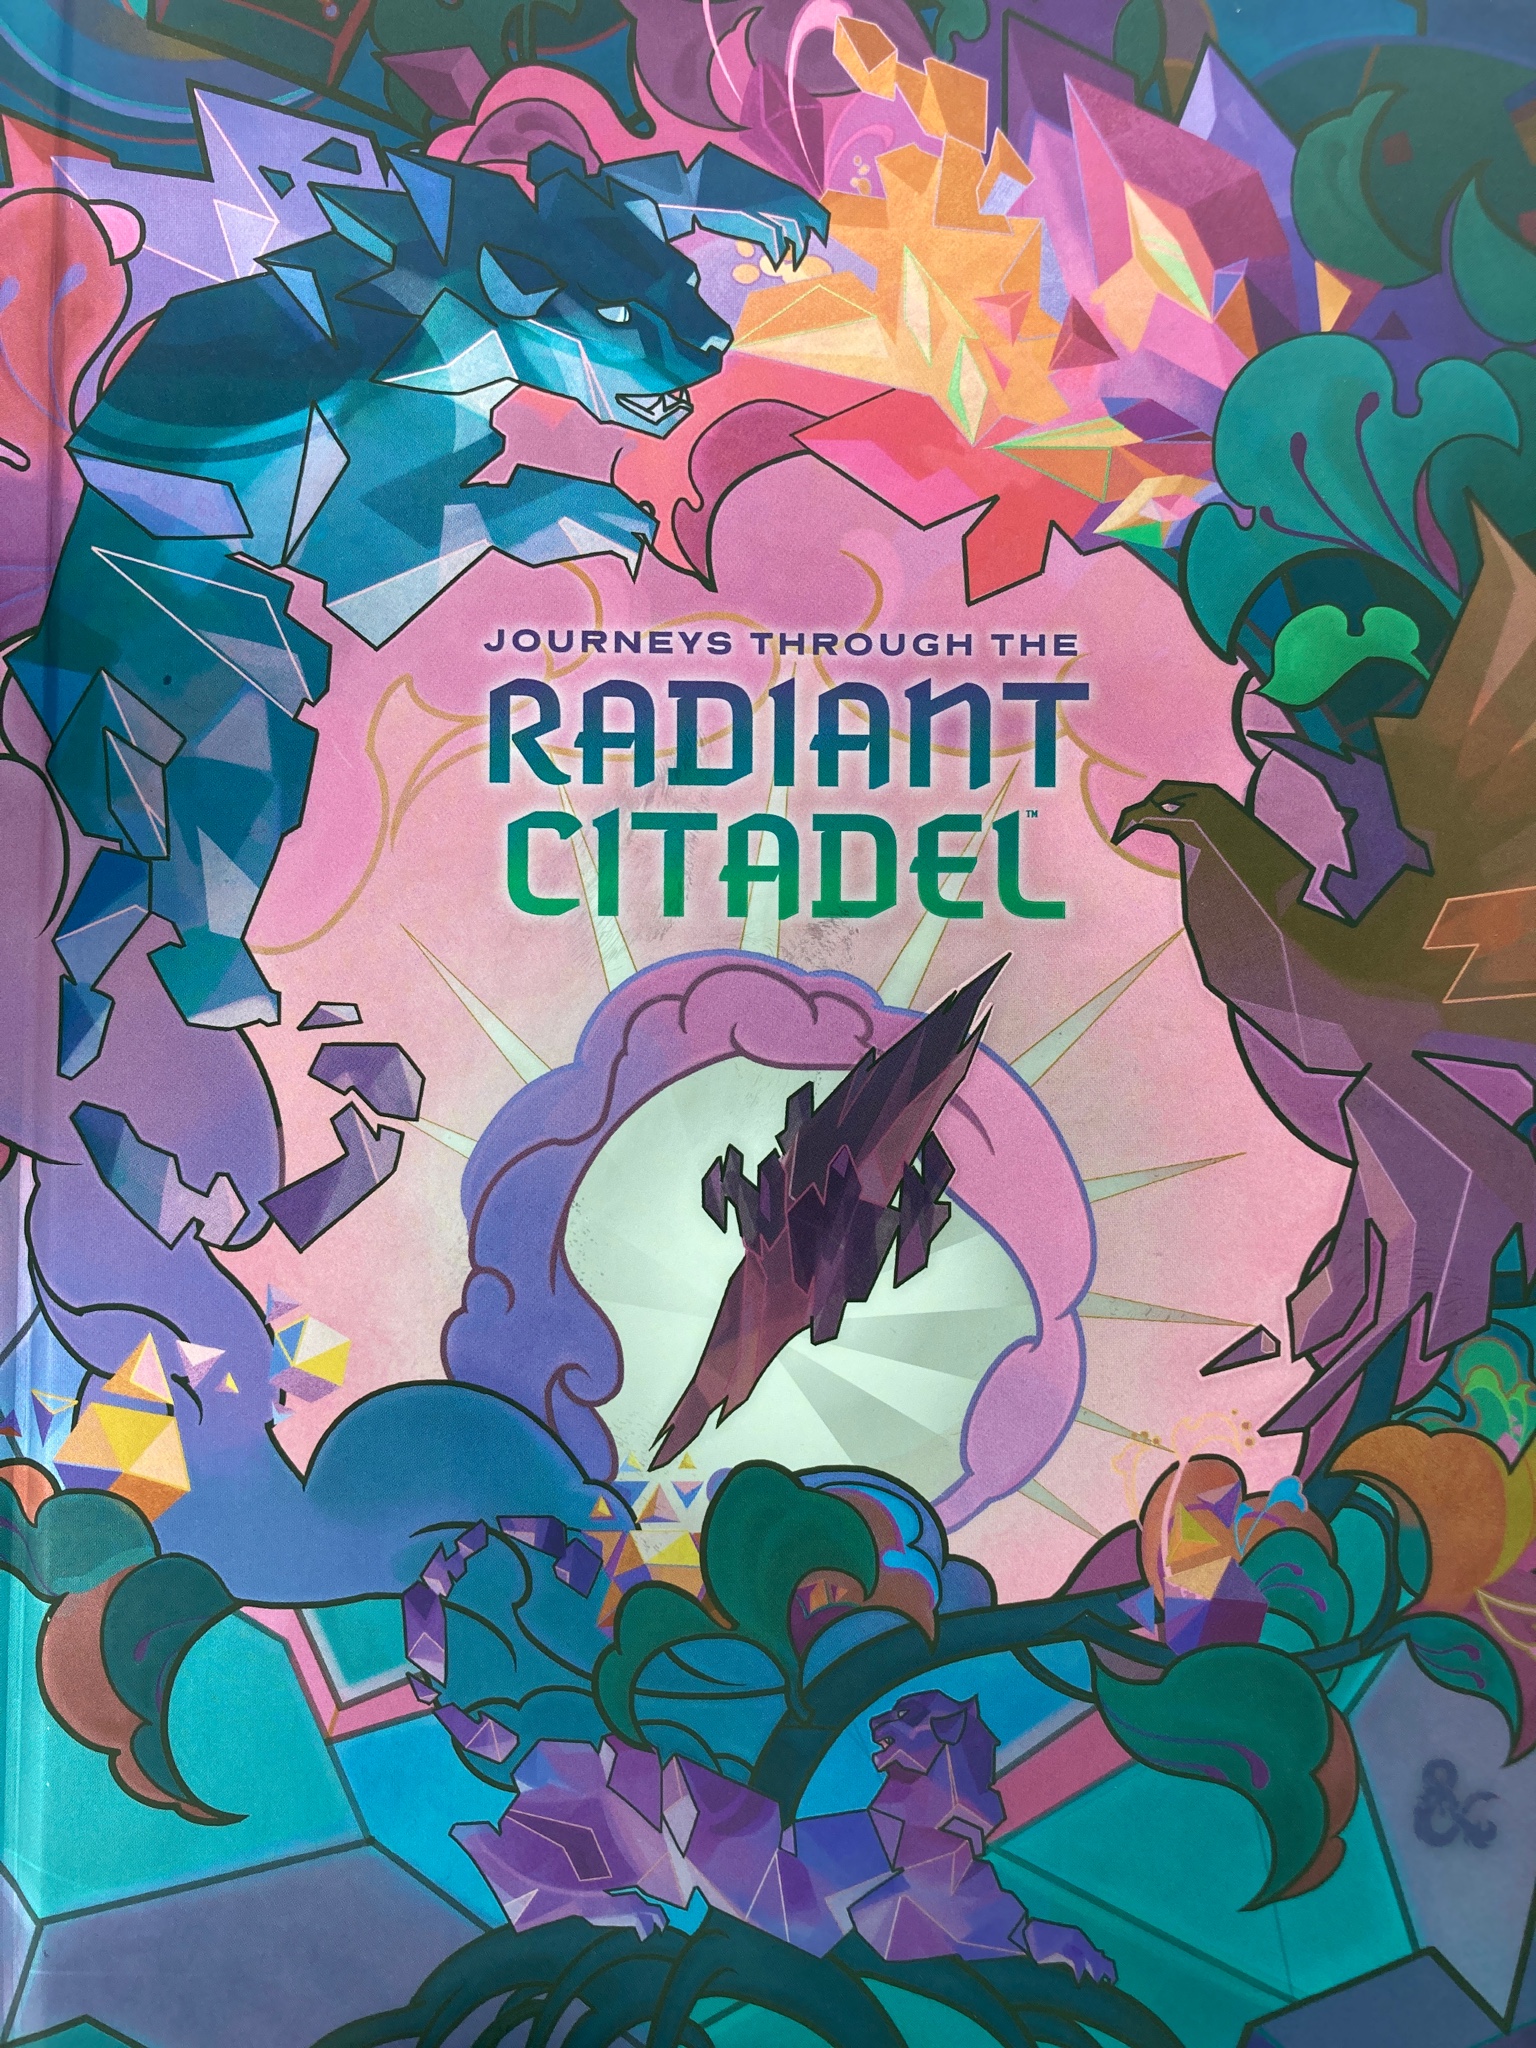 The Radiant Citadel book cover alternate version